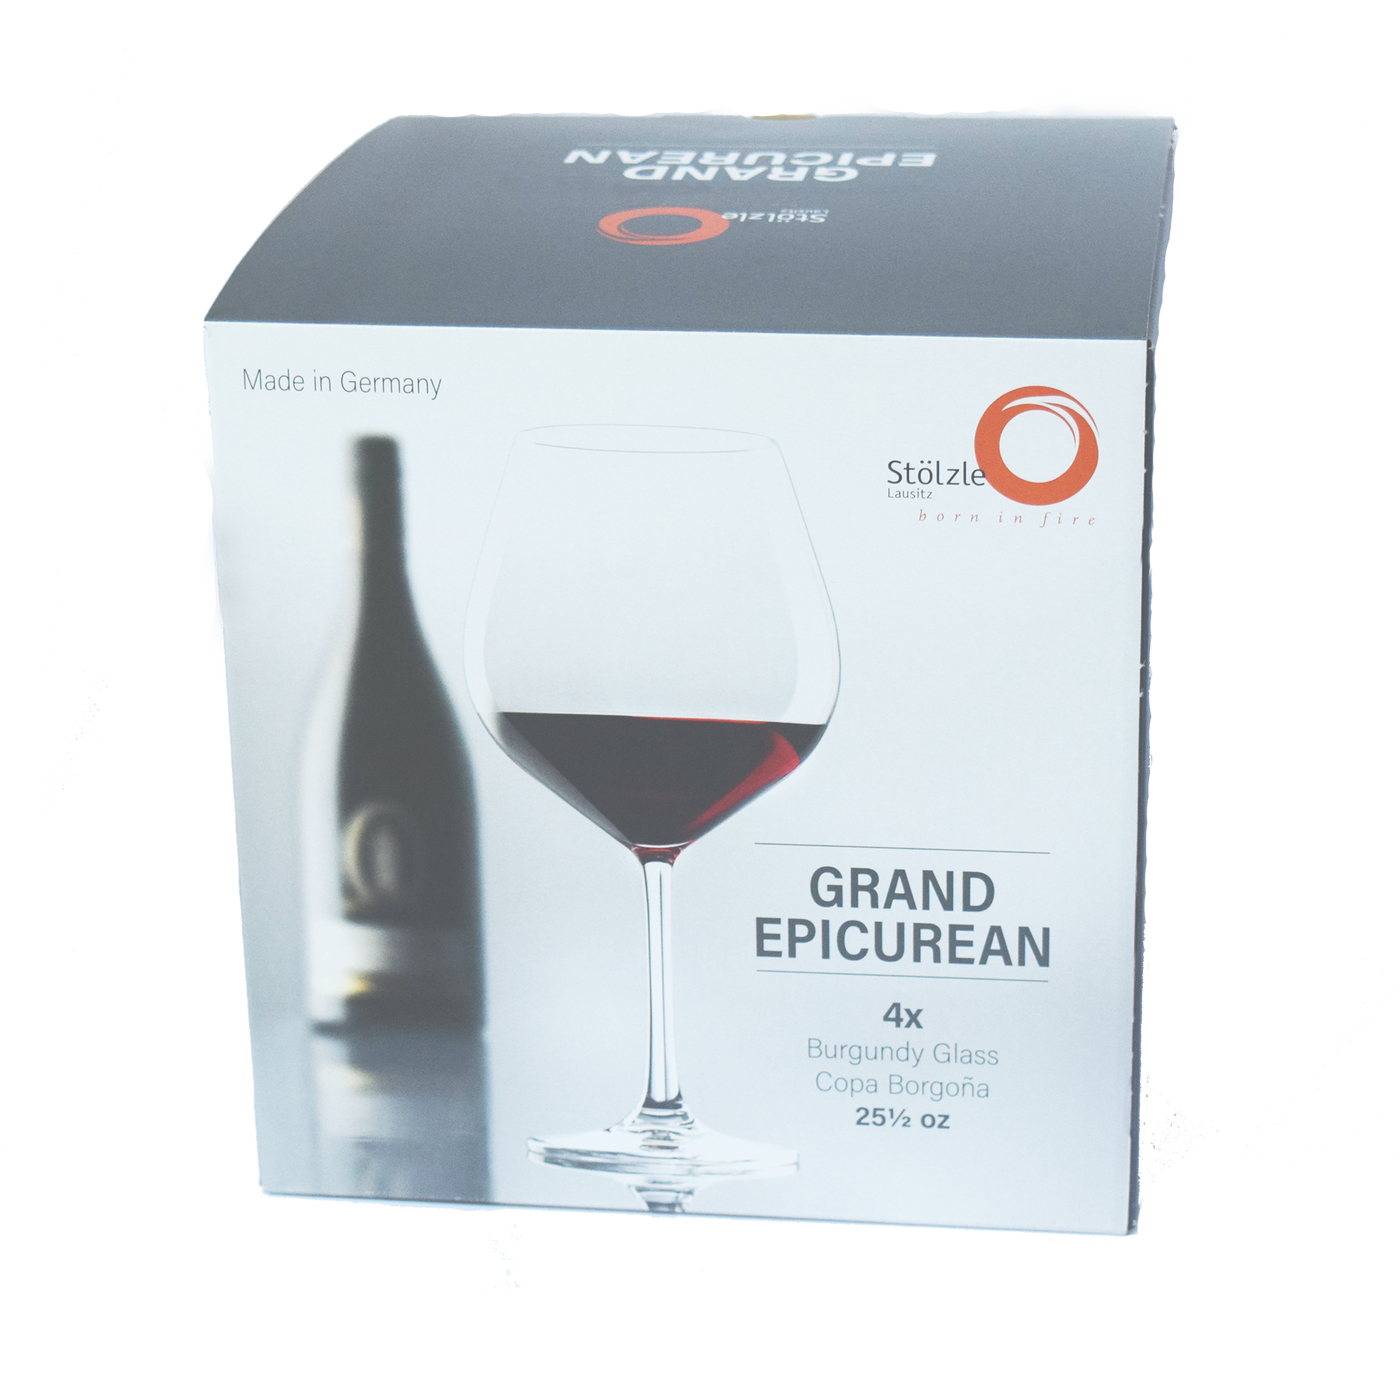 Grand Epicurean Pinot/Burgundy Wine Glass 26 oz. - Set of 4